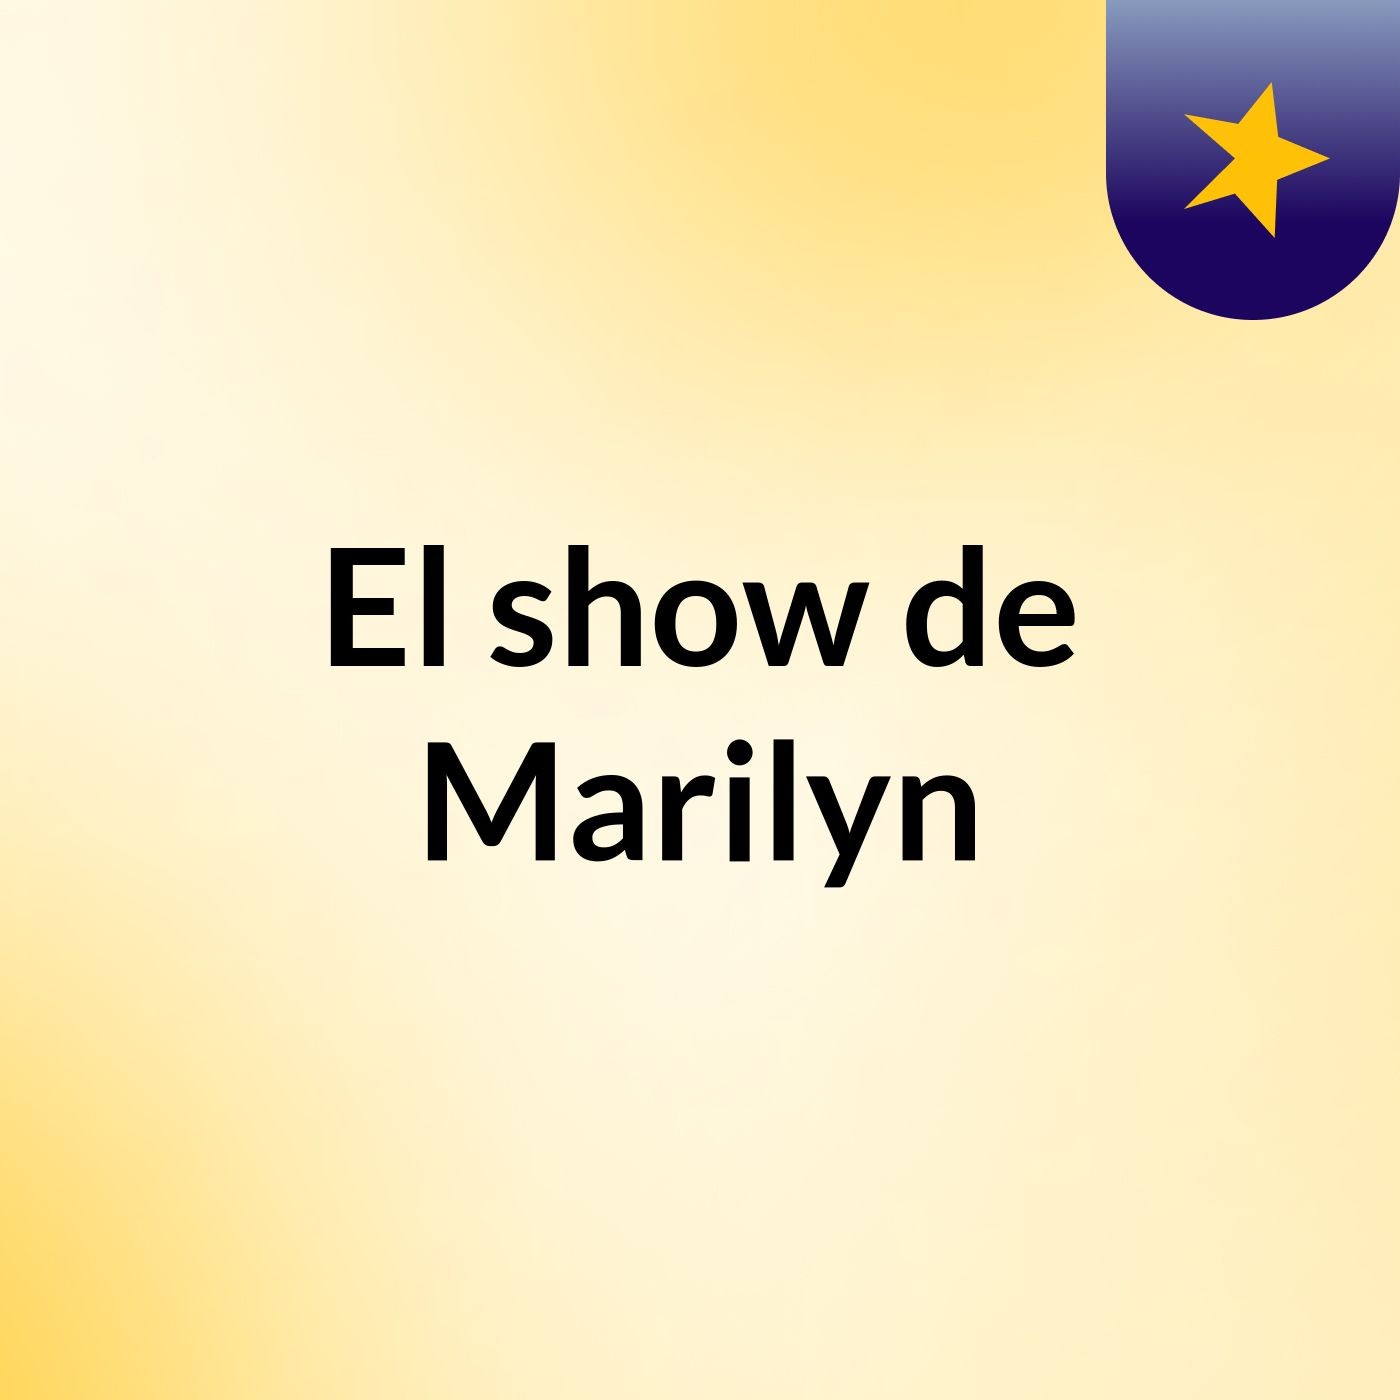 El show de Marilyn